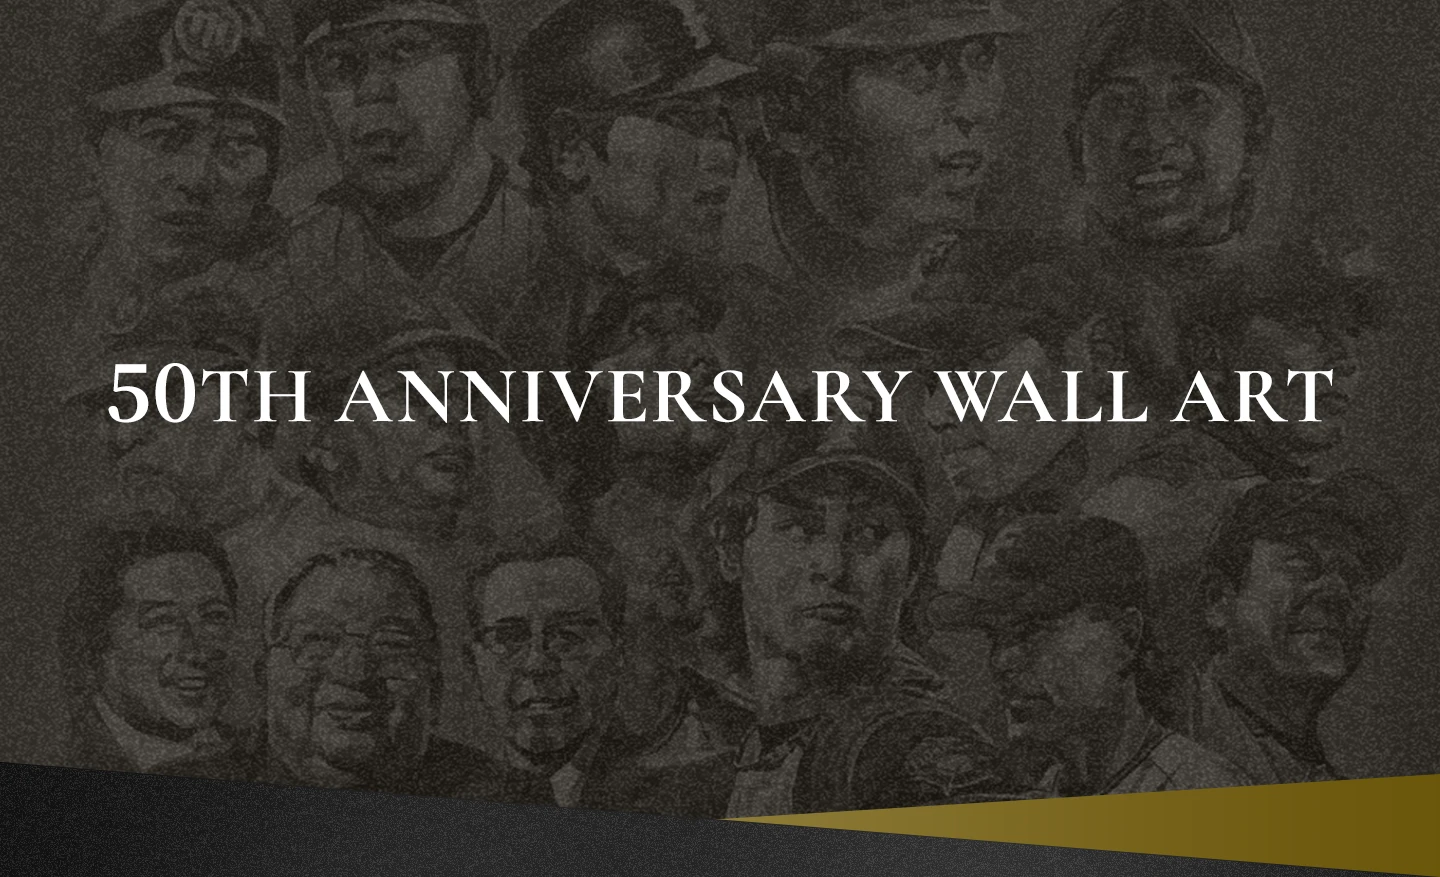 50th anniversary wall art